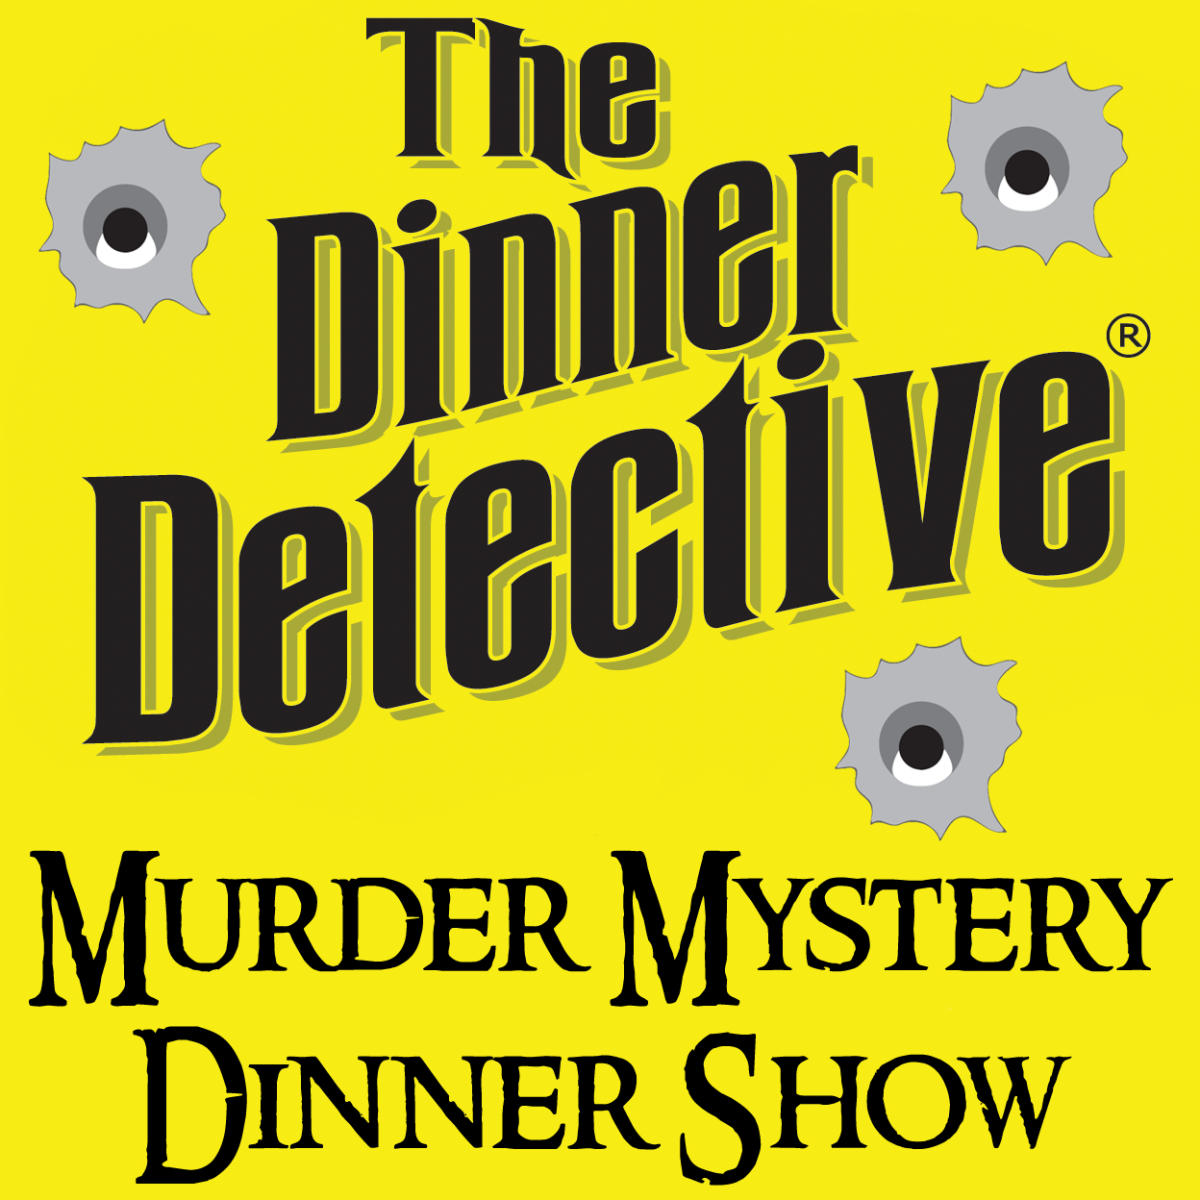 Murder Mystery 2 Guide